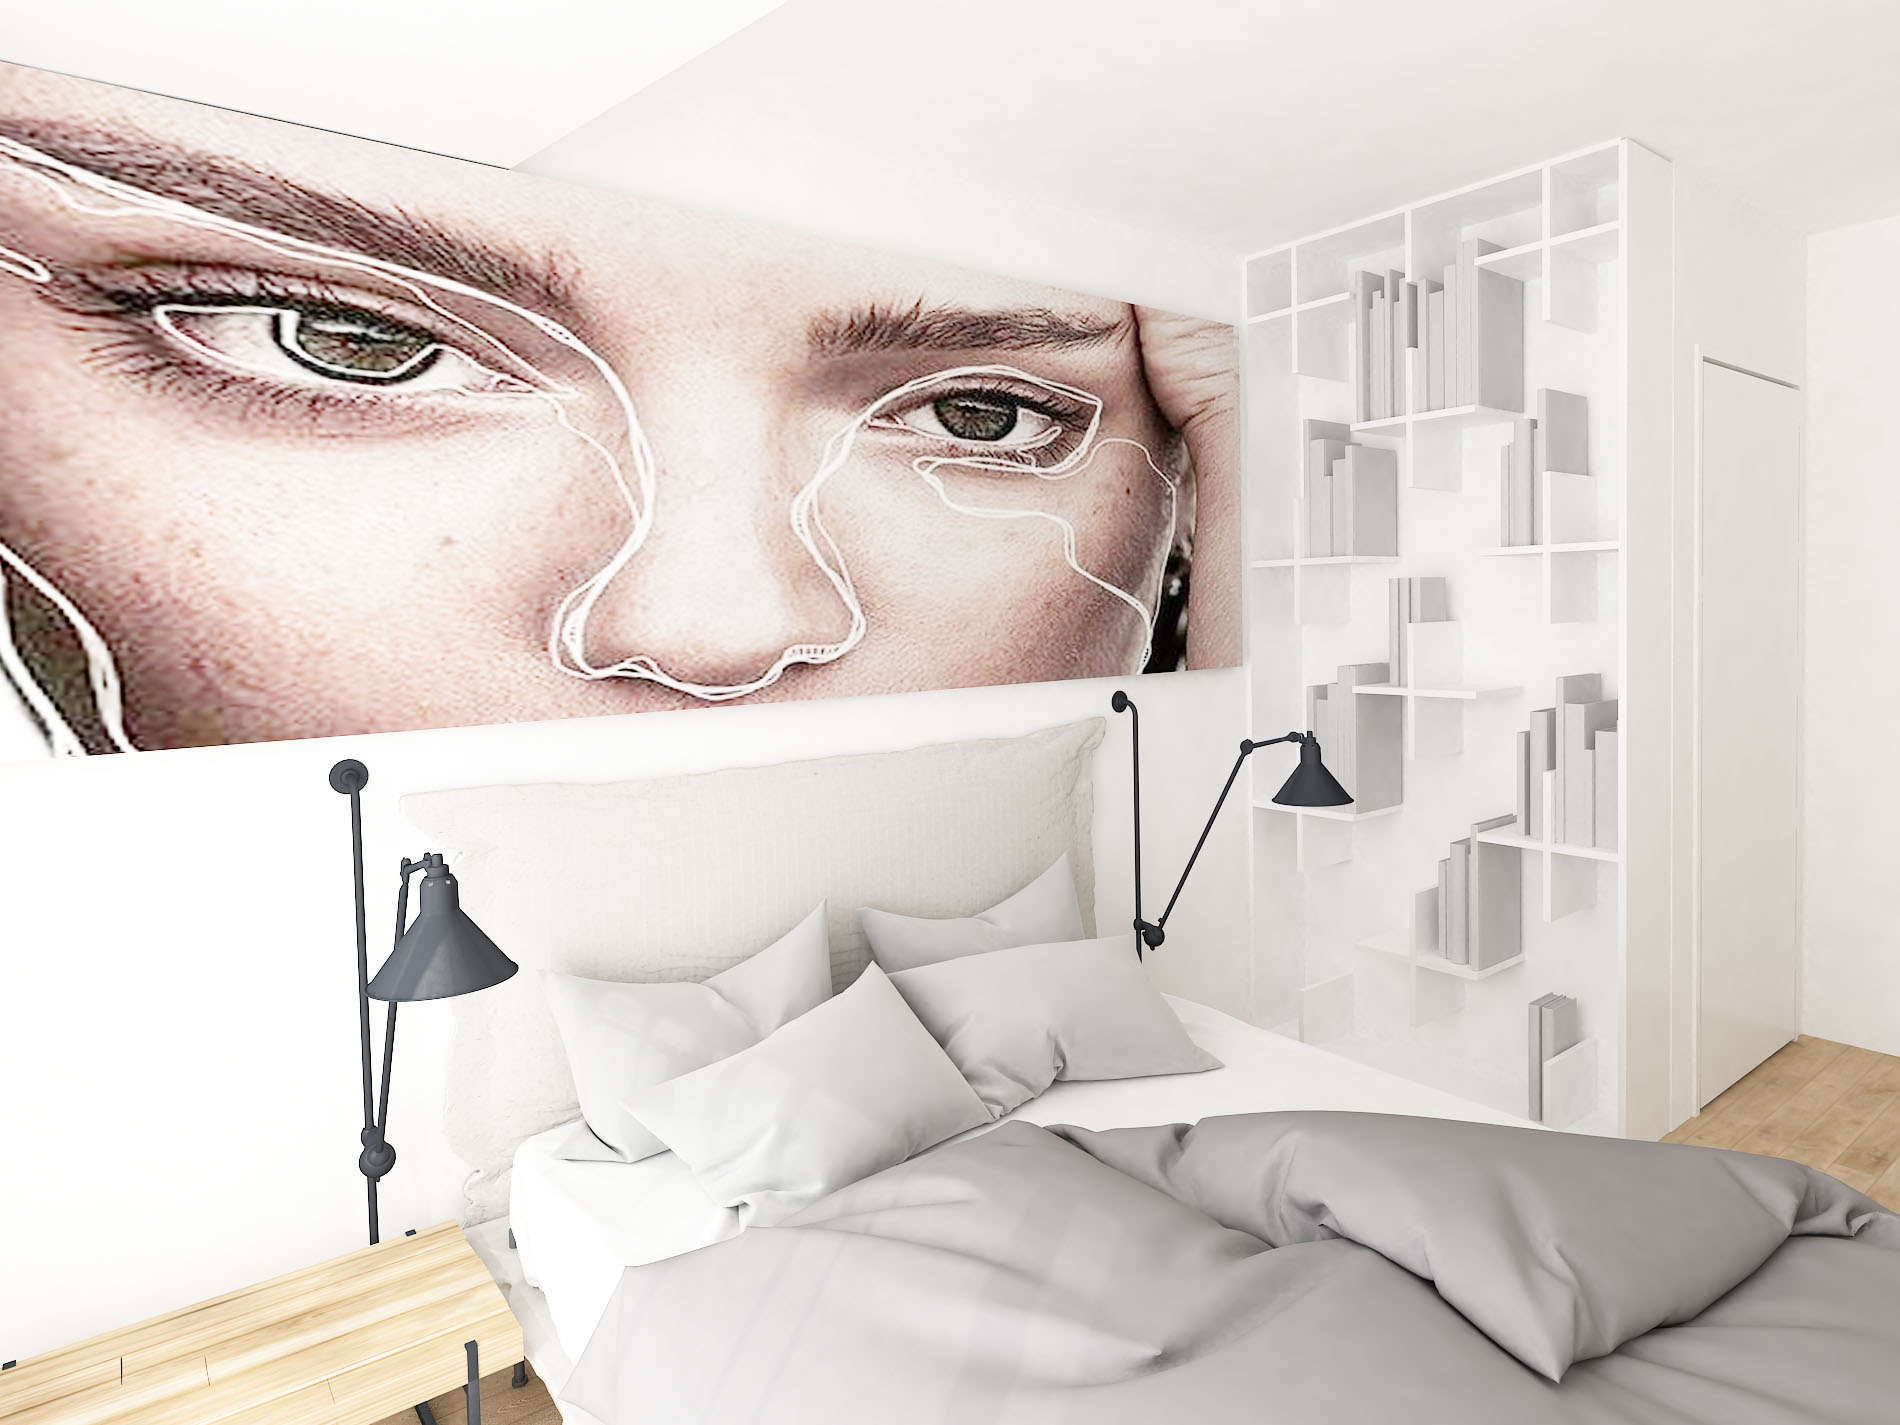 Interior design of a minimalist teenage bedroom with eyes artwork.